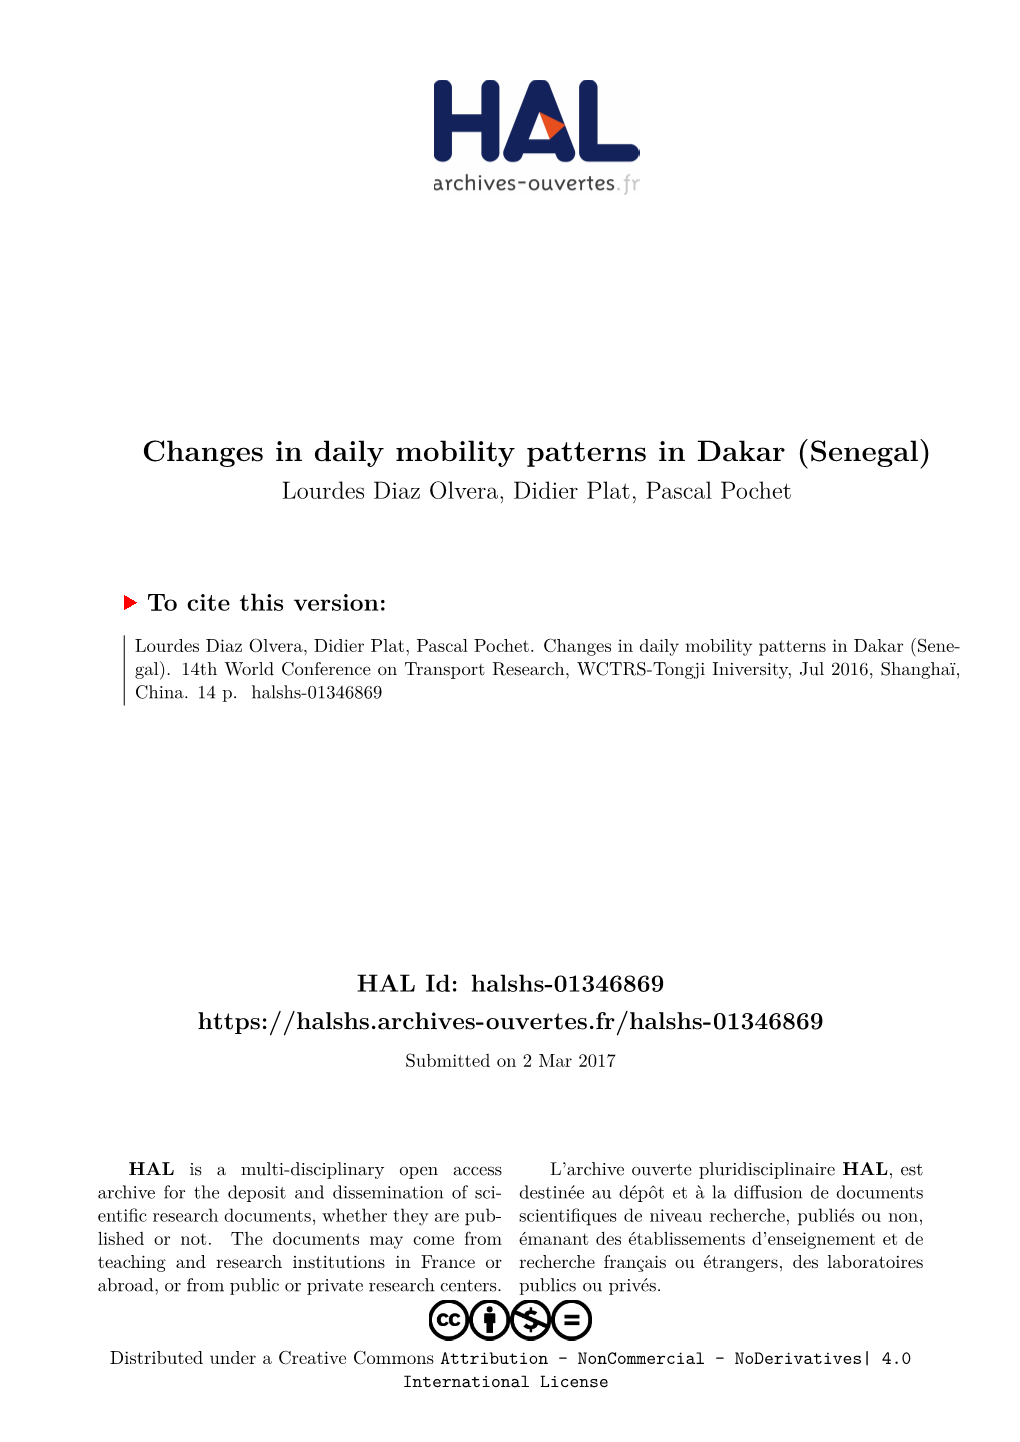 Changes in Daily Mobility Patterns in Dakar (Senegal) Lourdes Diaz Olvera, Didier Plat, Pascal Pochet